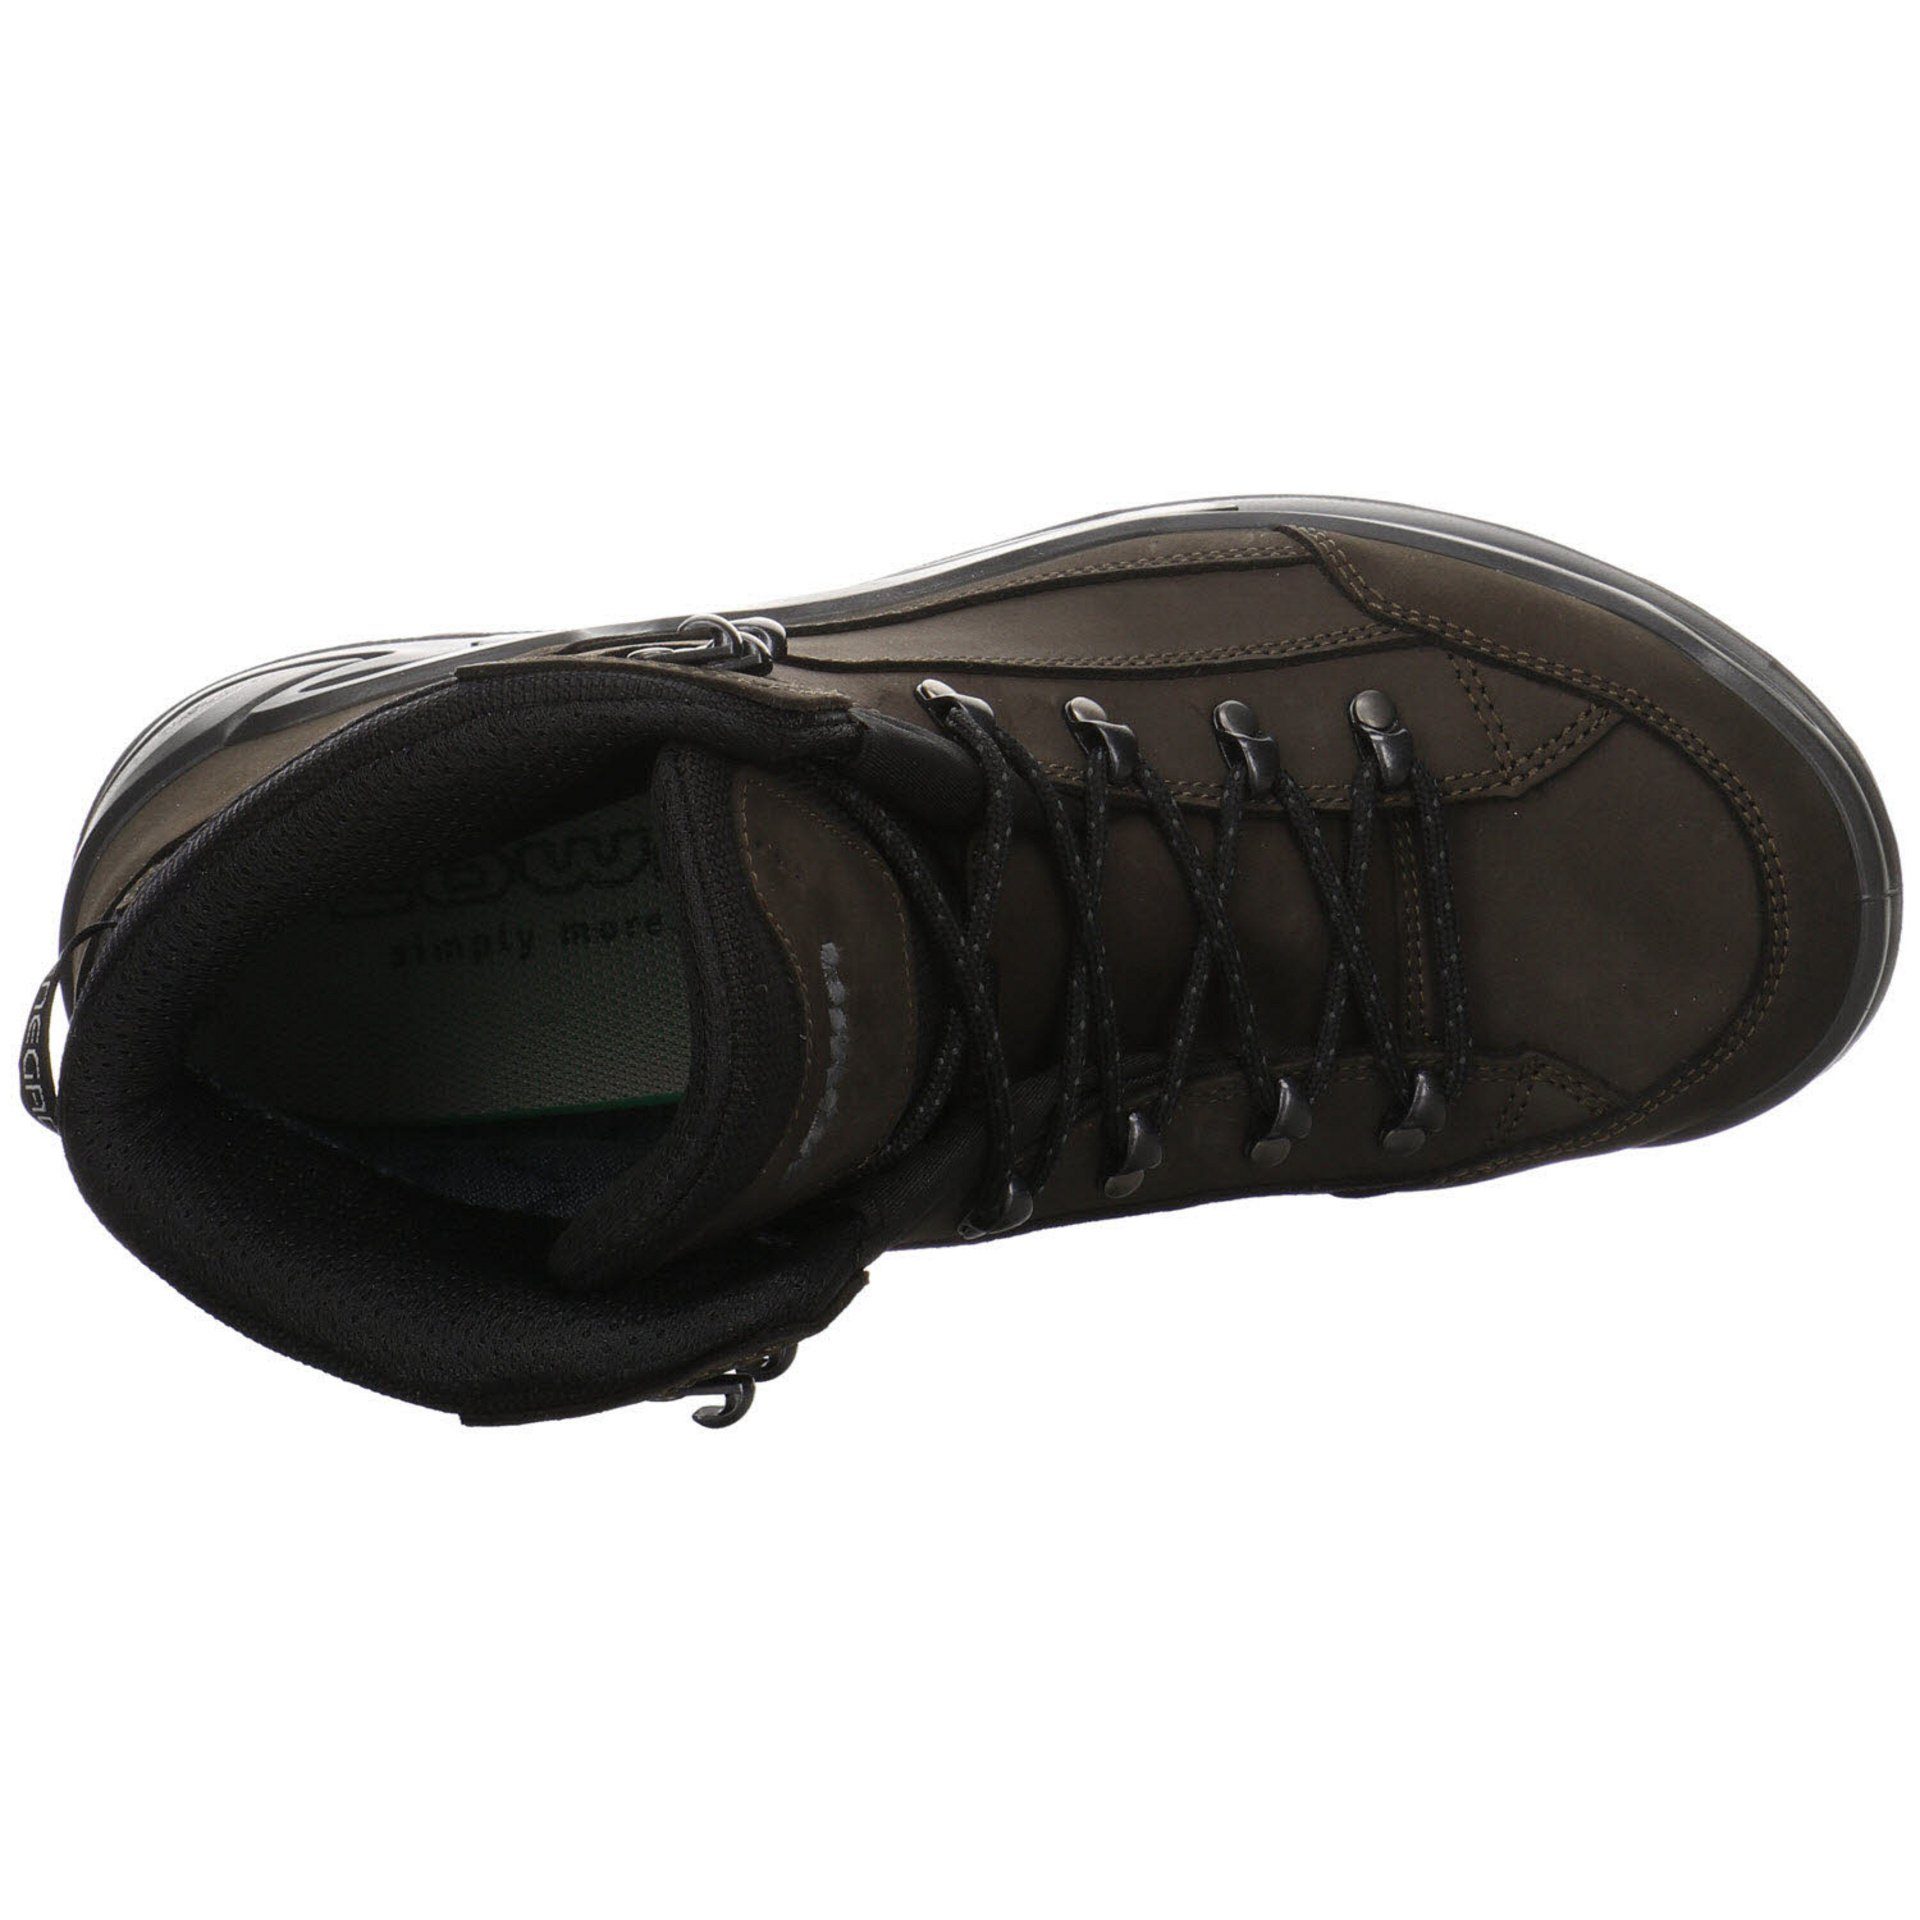 Herren Renegade Lowa Leder-/Textilkombination Wanderschuh Outdoor Schuhe Outdoorschuh dunkelbraun/schwarz GTX mid